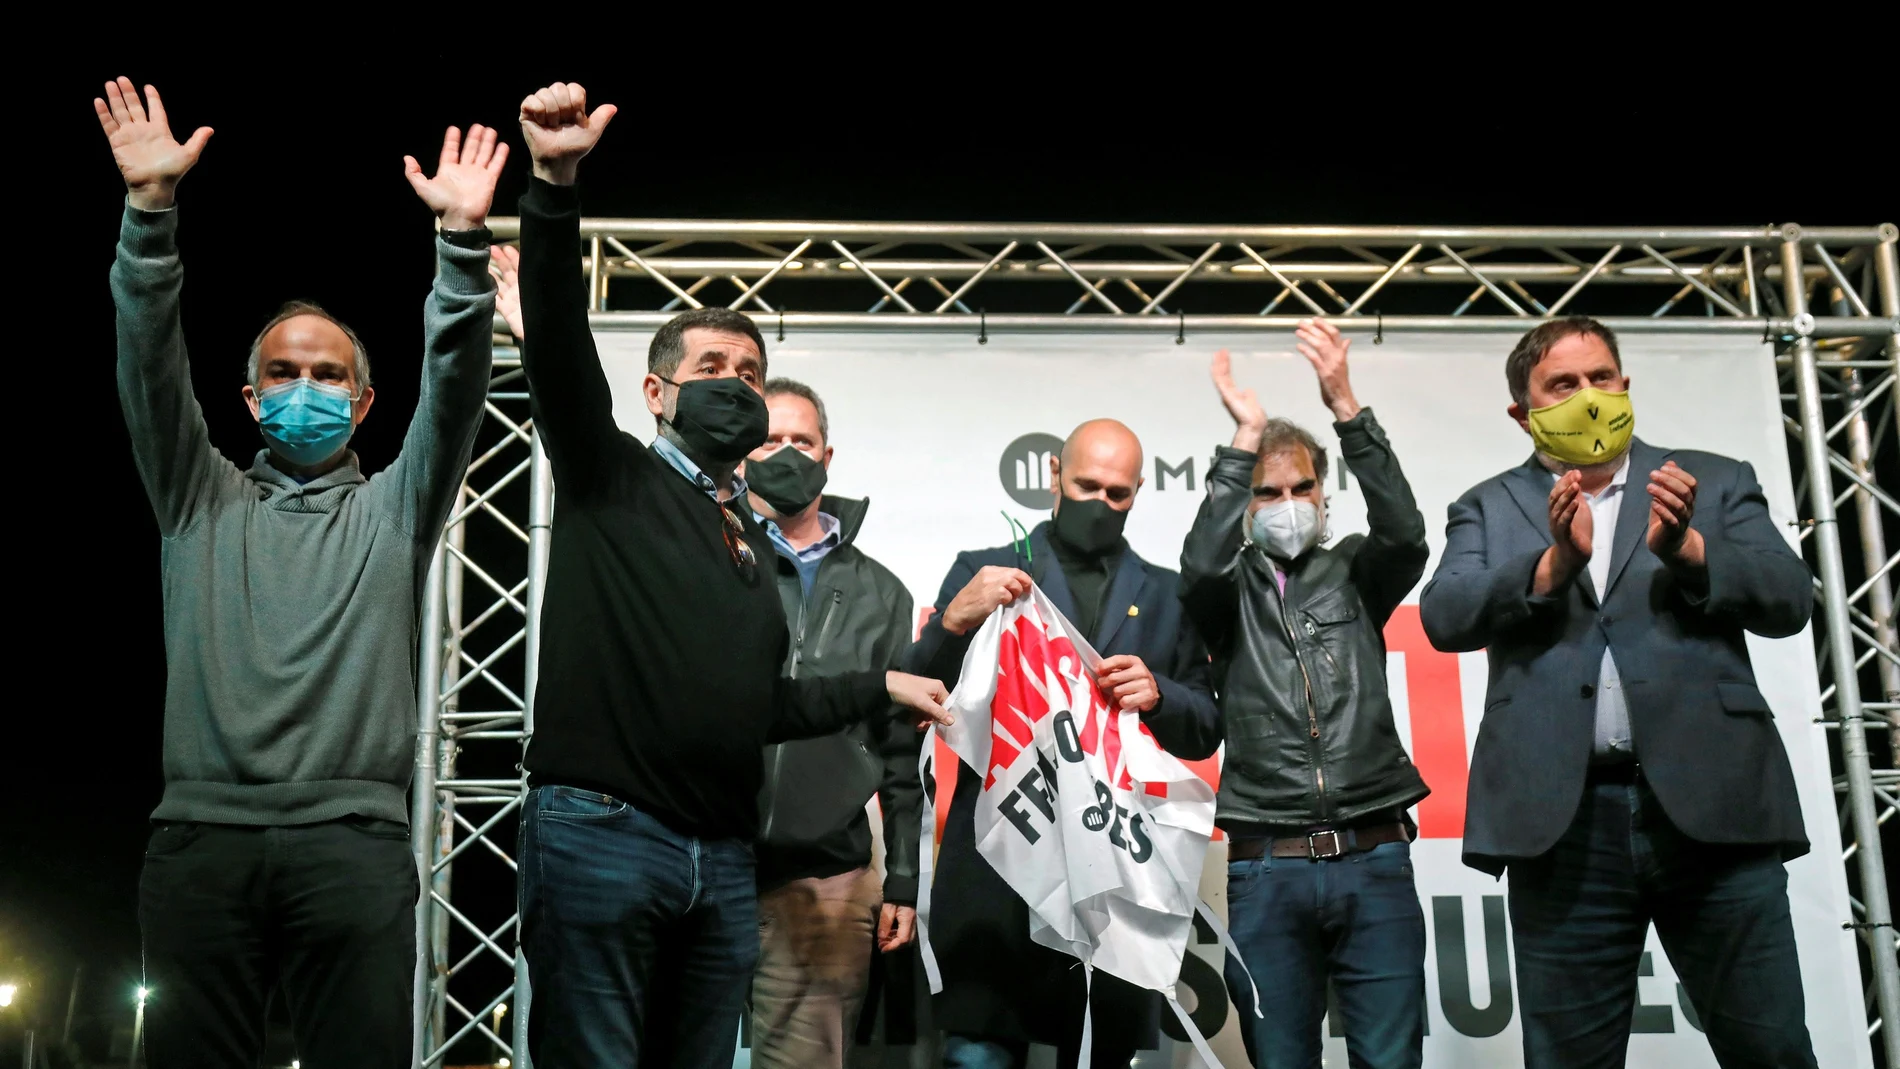 Seis de los presos del procés, Jordi Turull, Jordi Sànchez, Joaquim Forn, Raül Romeva, Jordi Cuixart y Oriol Junqueras en un acto que organizó en su día Omnium.